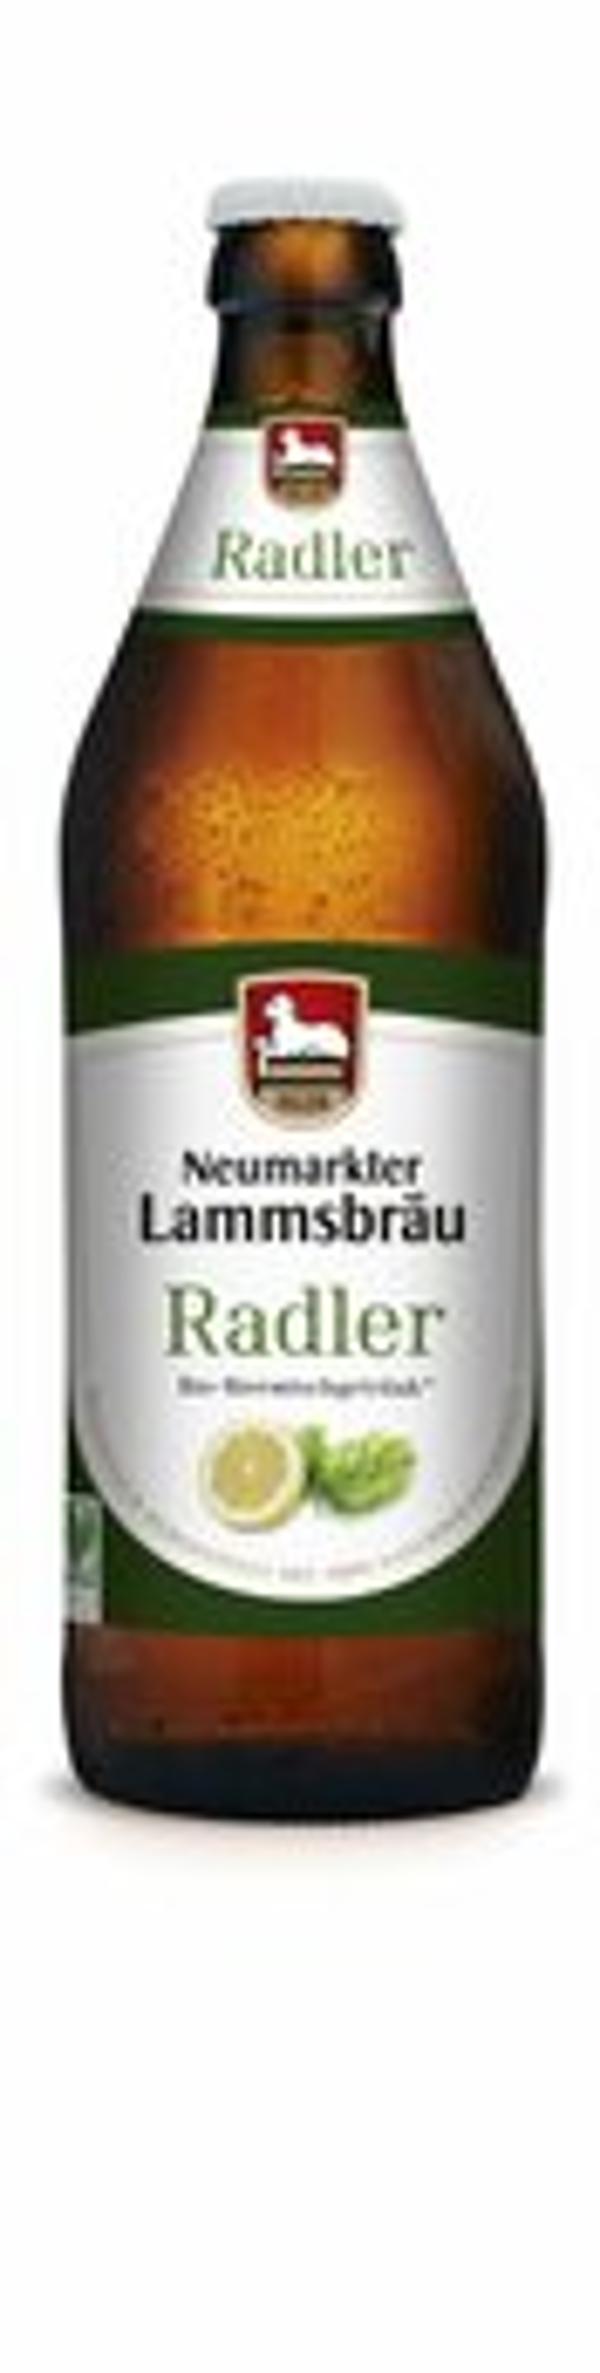 Produktfoto zu Lammsbräu Radler